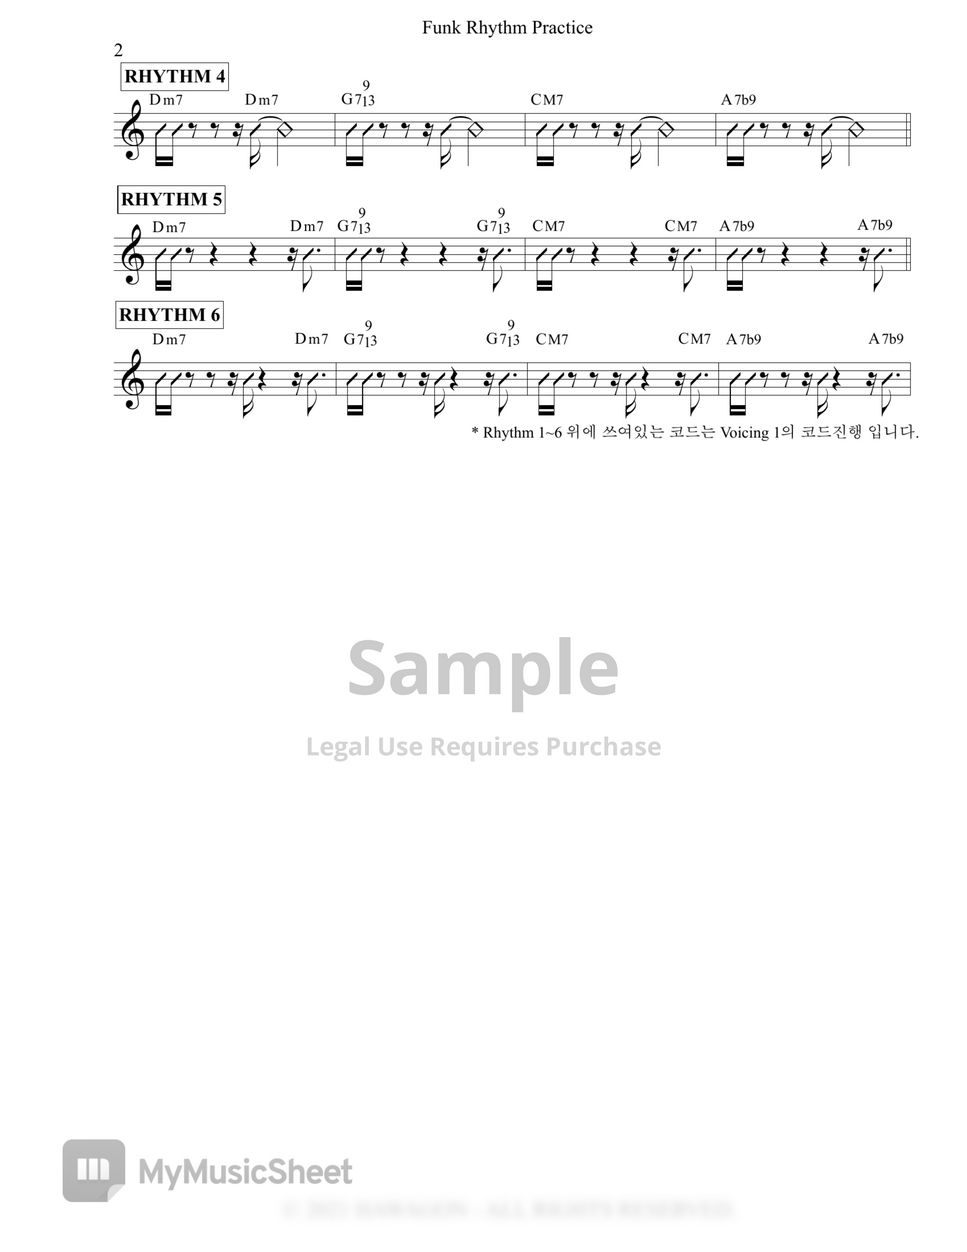 HAWAGON - Funk Piano Rhythm Practice by HAWAGON